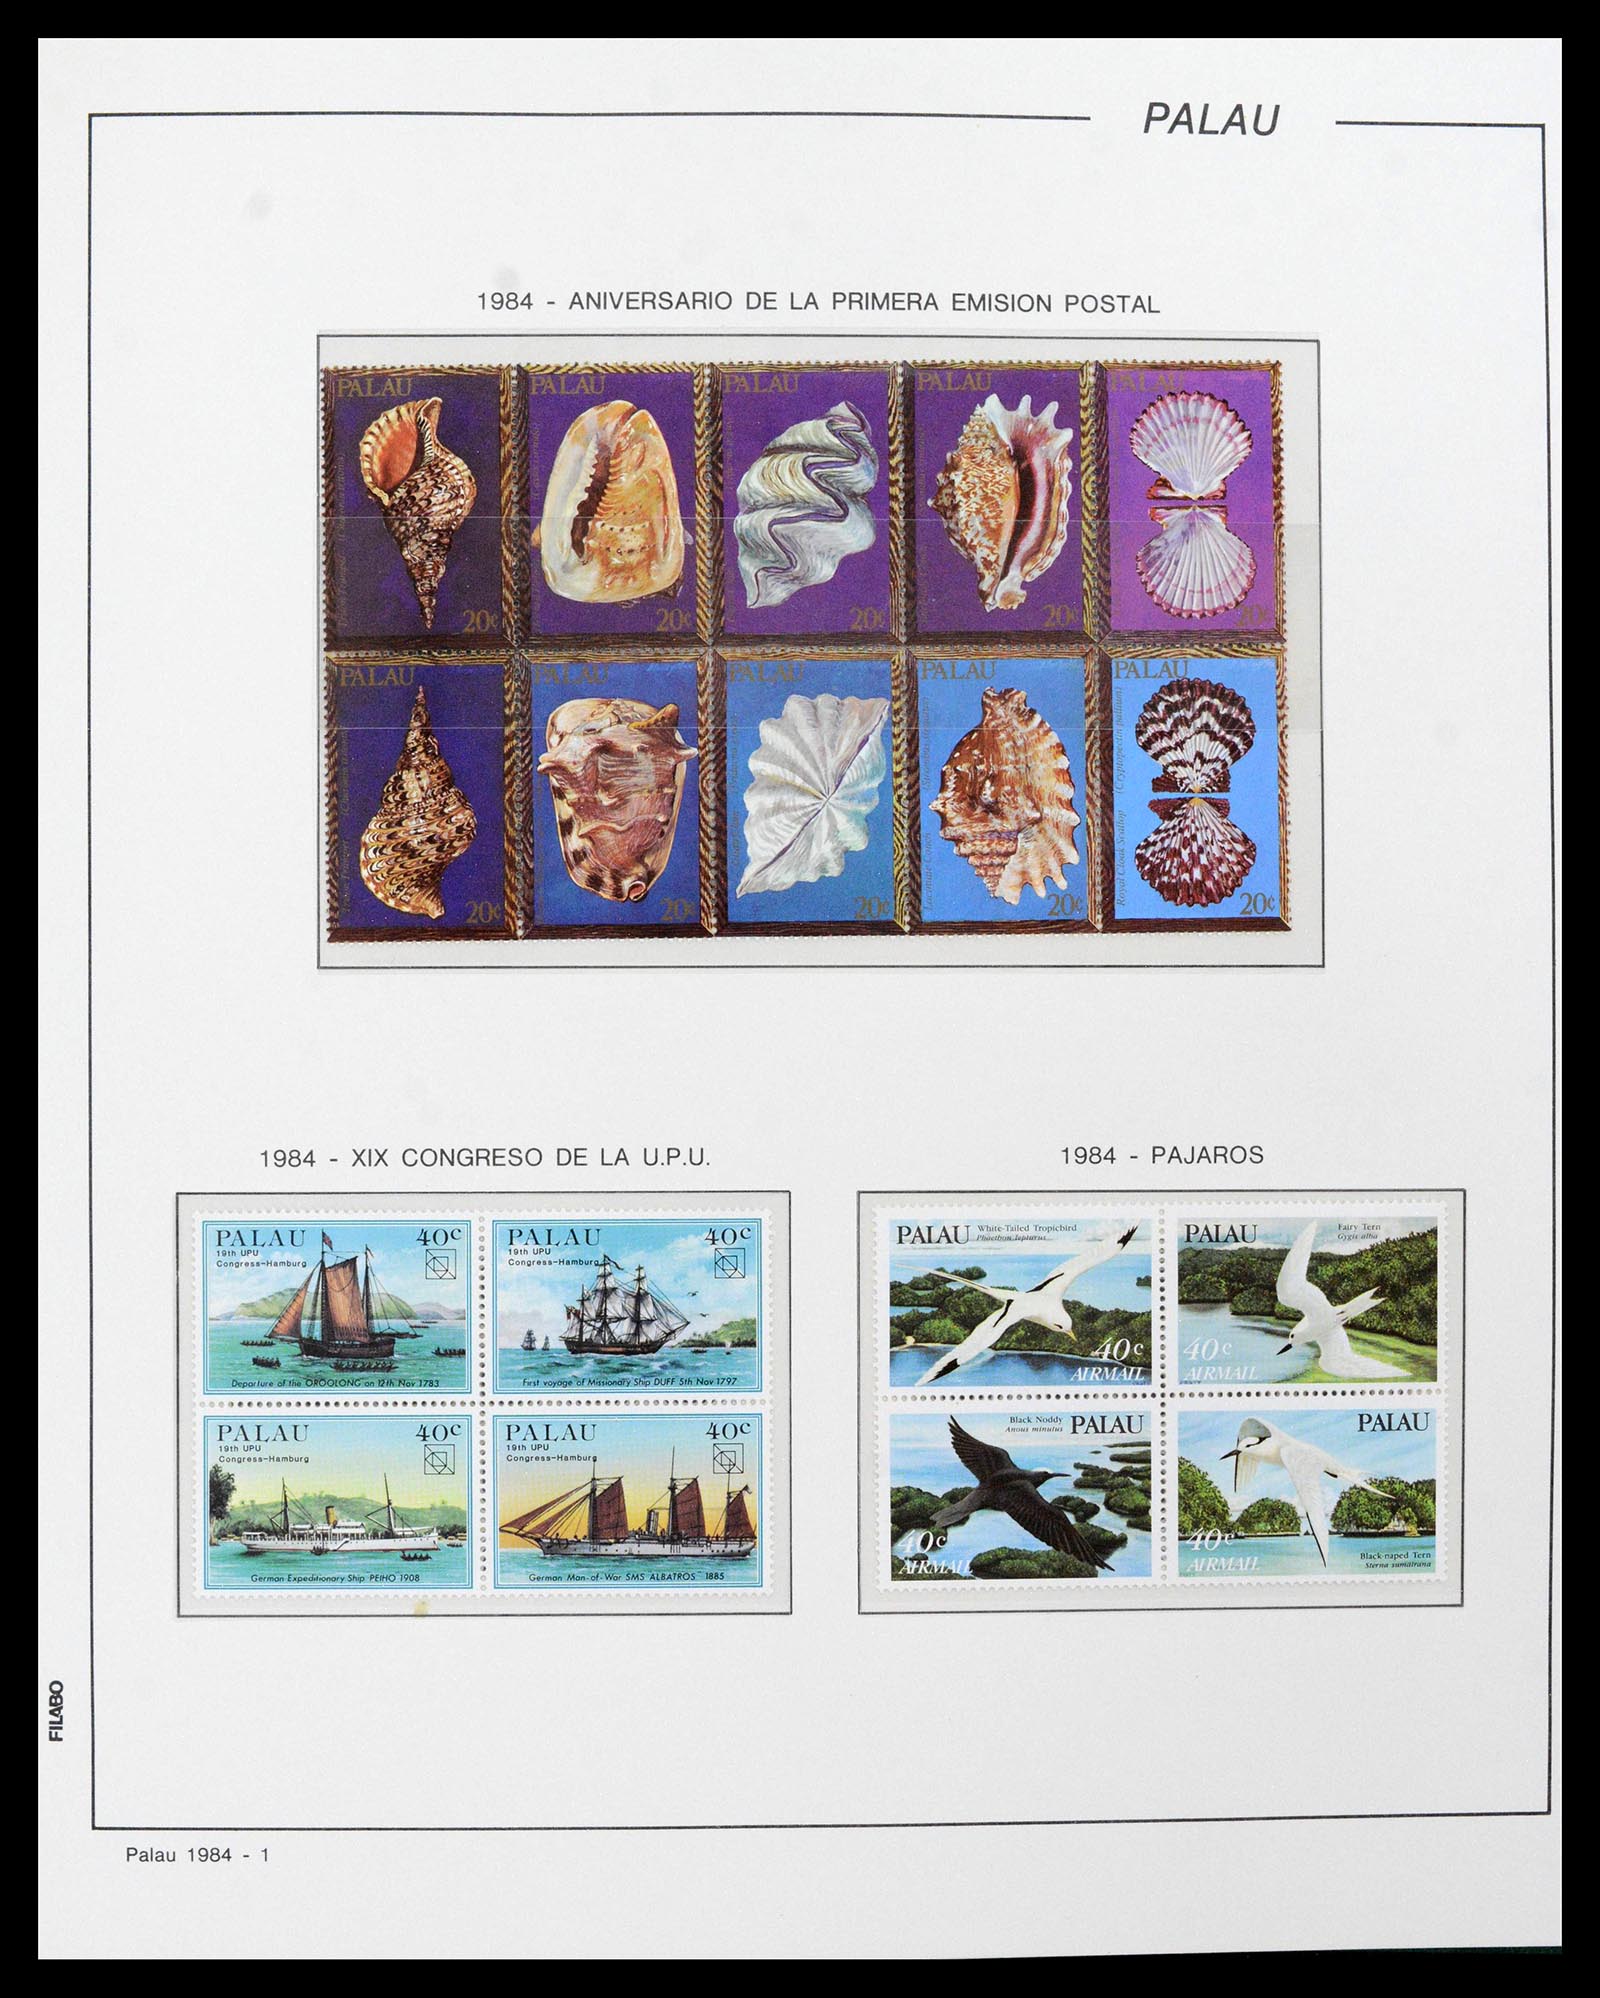 39222 0003 - Stamp collection 39222 Palau, Micronesia and Marshall islands 1980-1995.